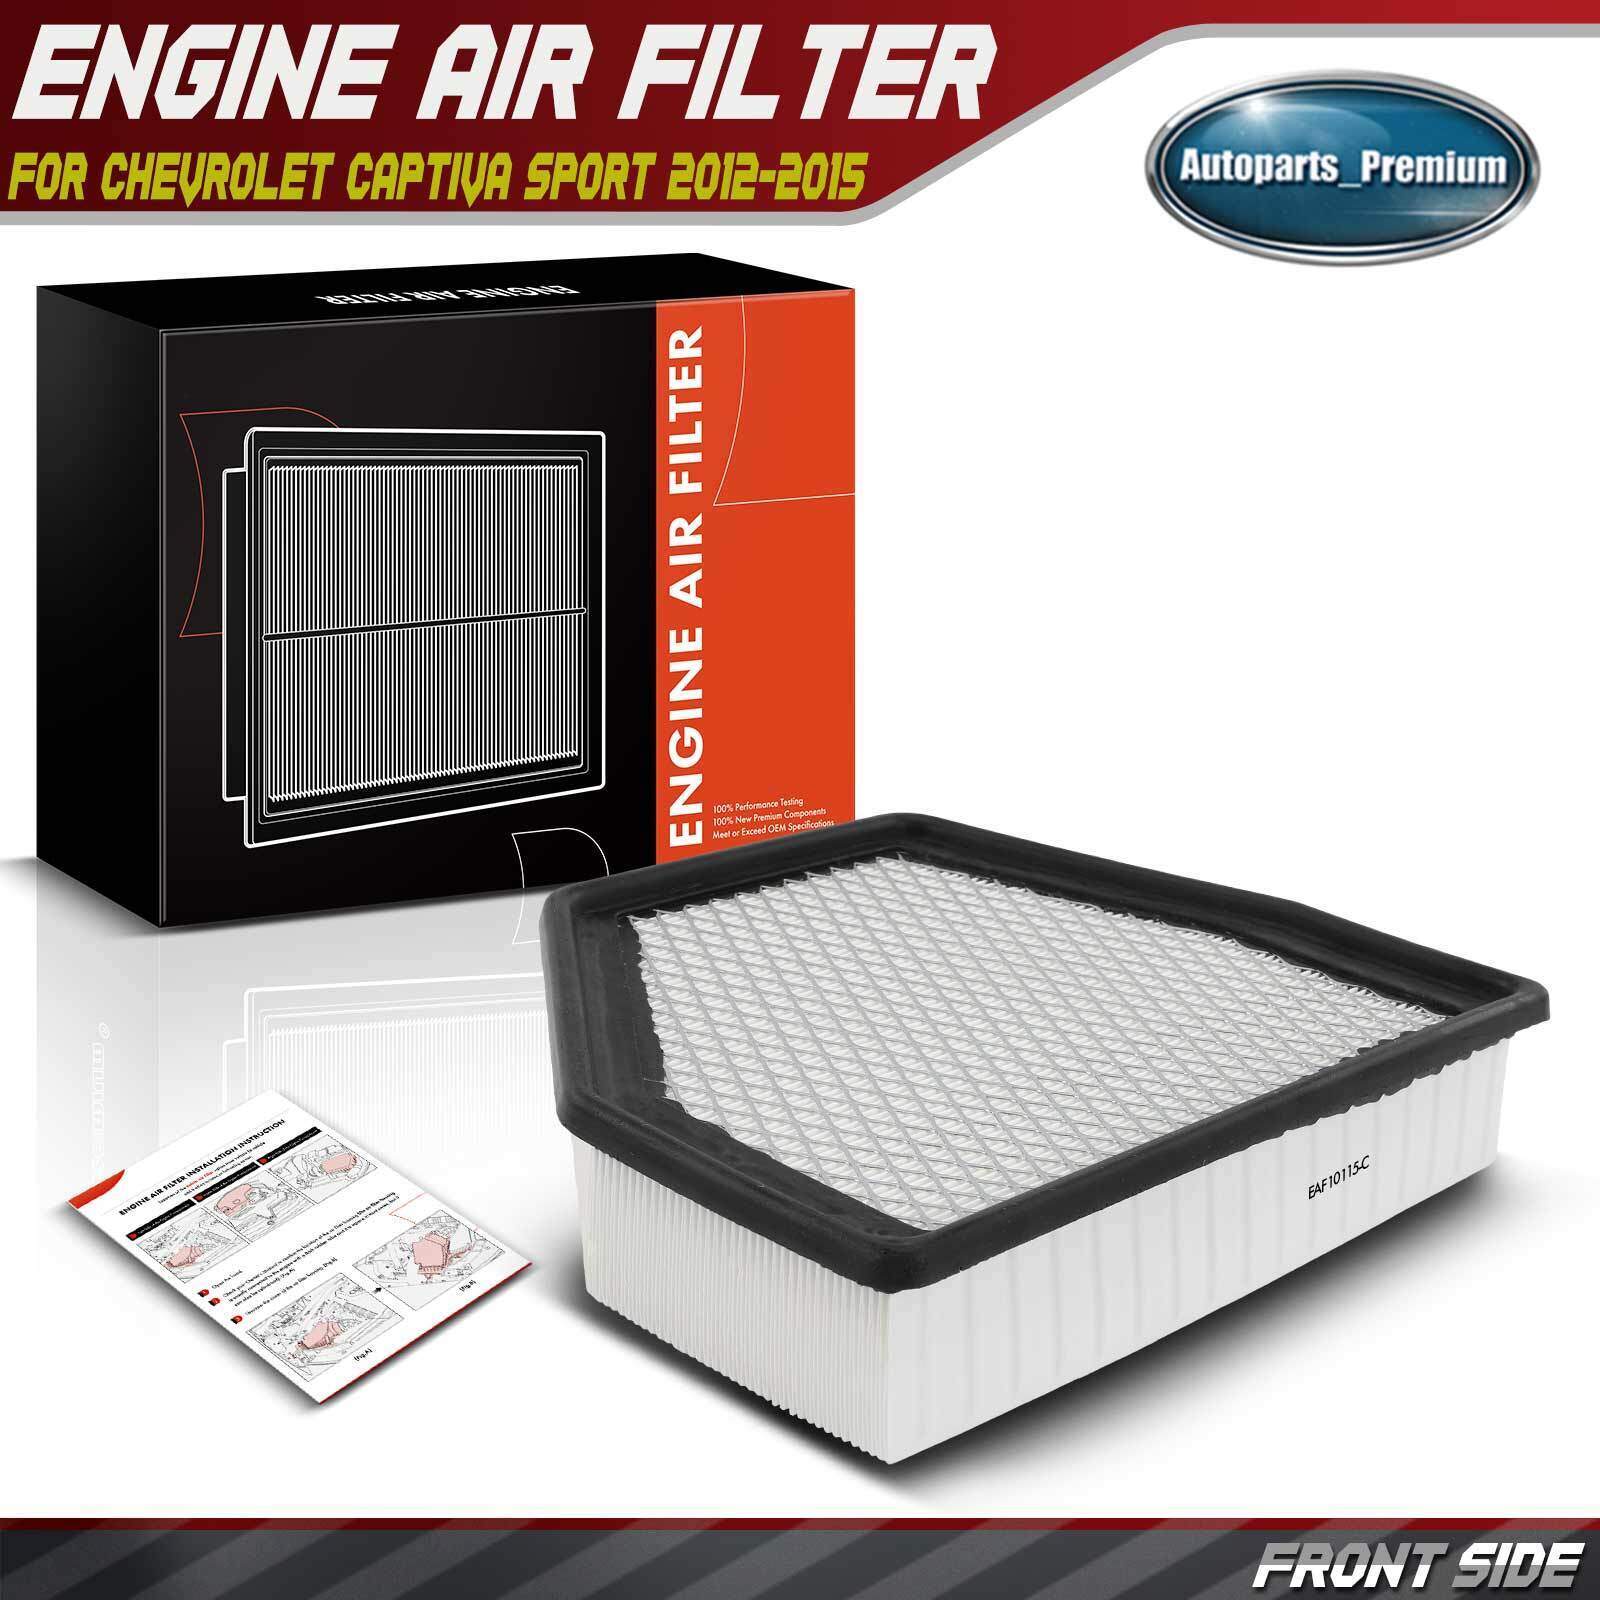 New Engine Air Filter for Chevrolet Captiva Sport 2012-2015 Saturn Vue 2008-2010